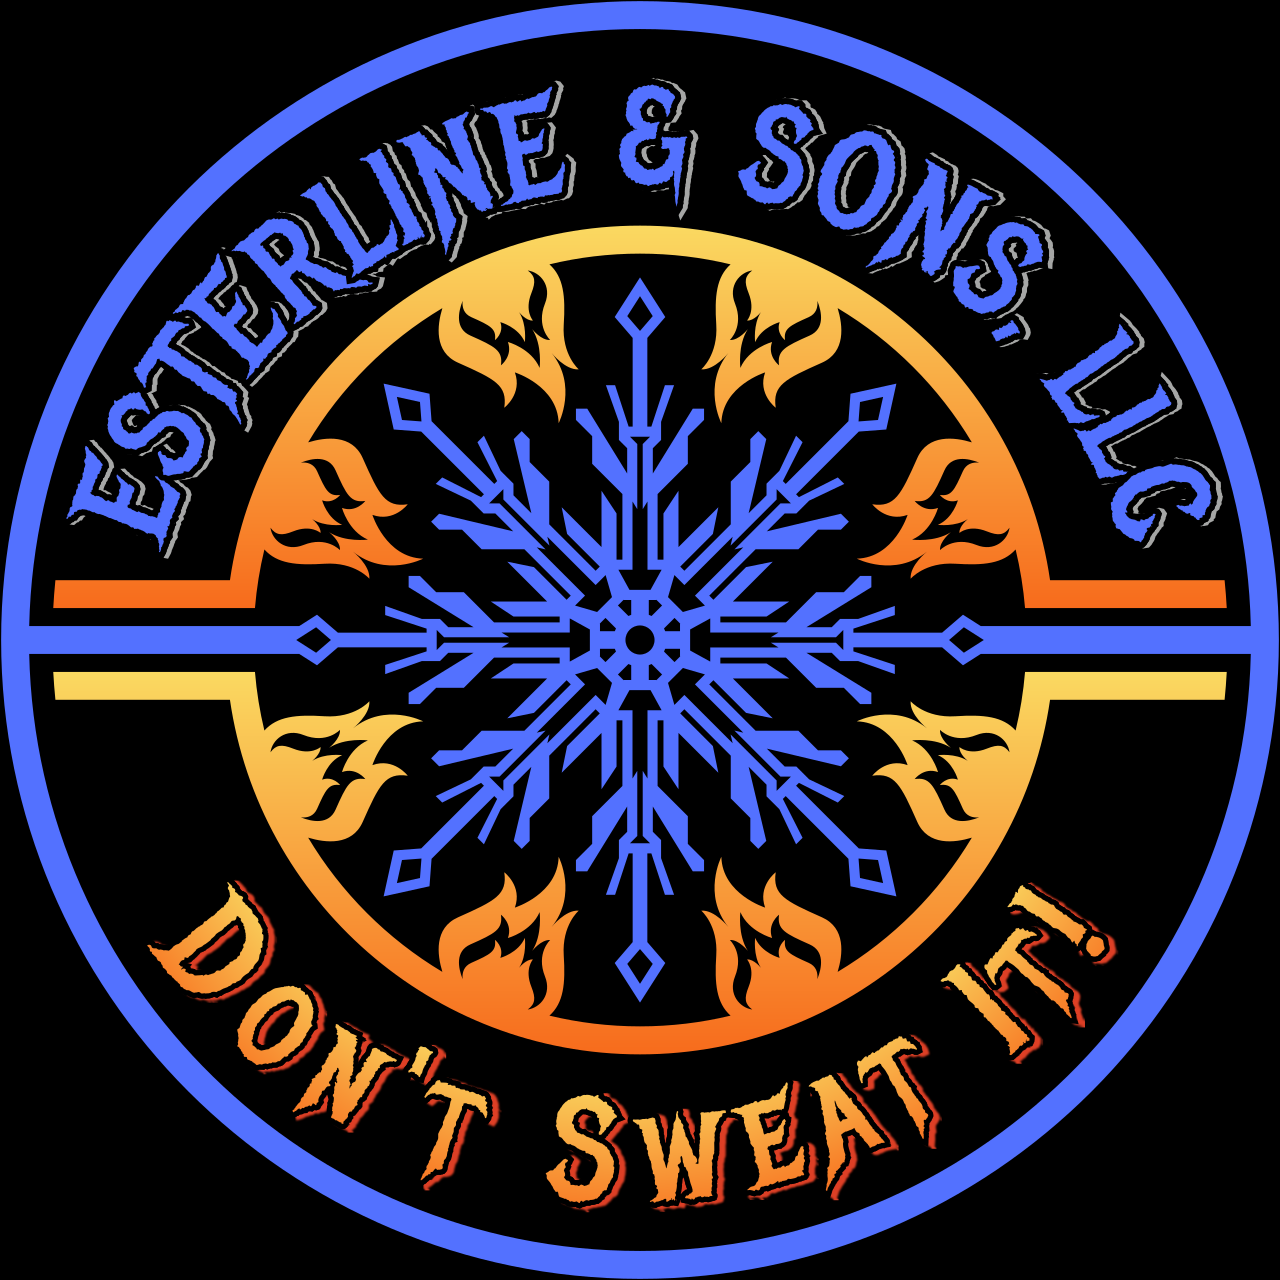 ESTERLINE & SONS, LLC's logo